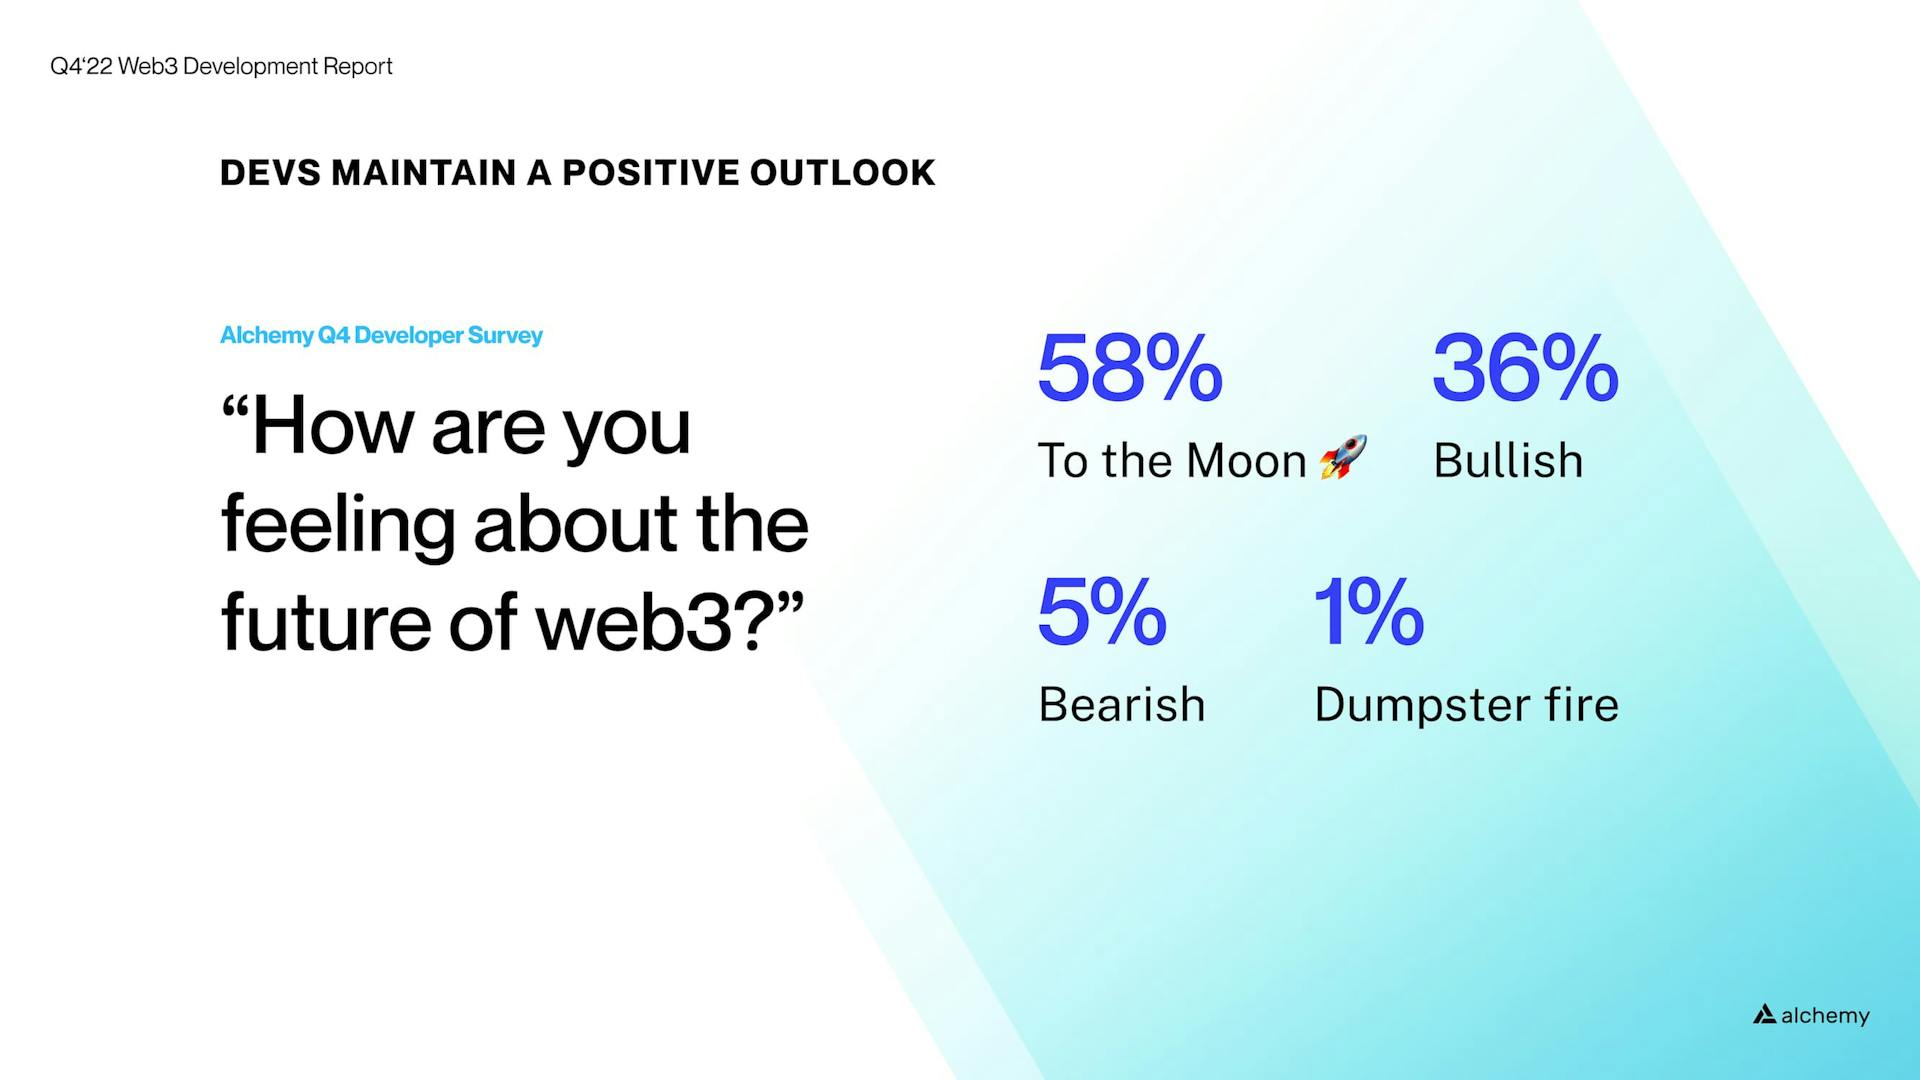 94% of web3 developers expressed a bullish industry sentiment despite a prolonged bear market.